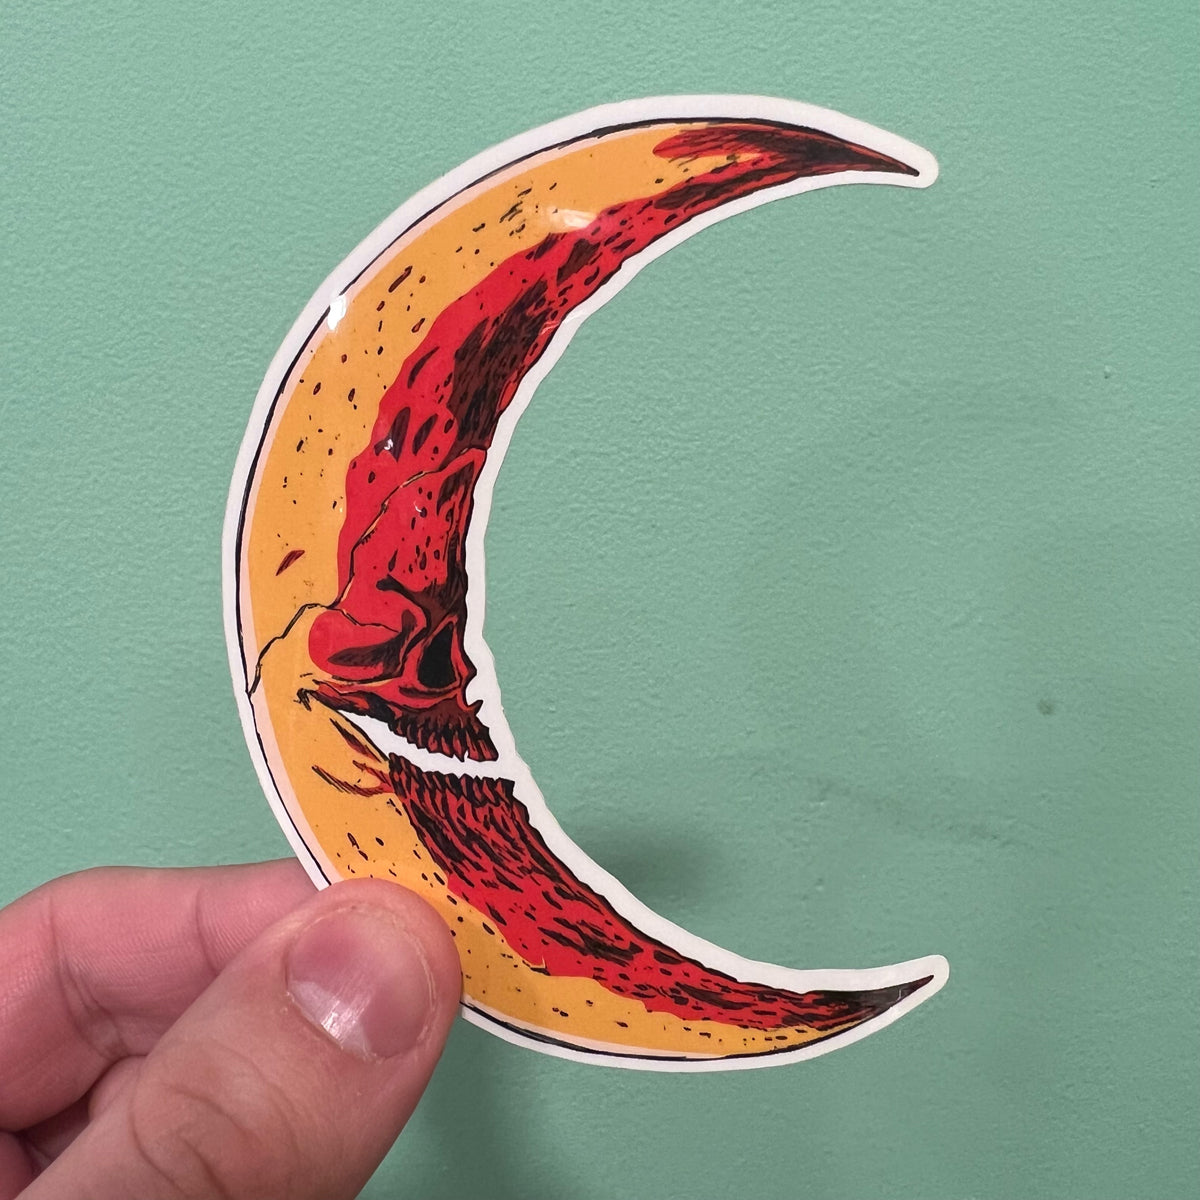 Moon' Sticker